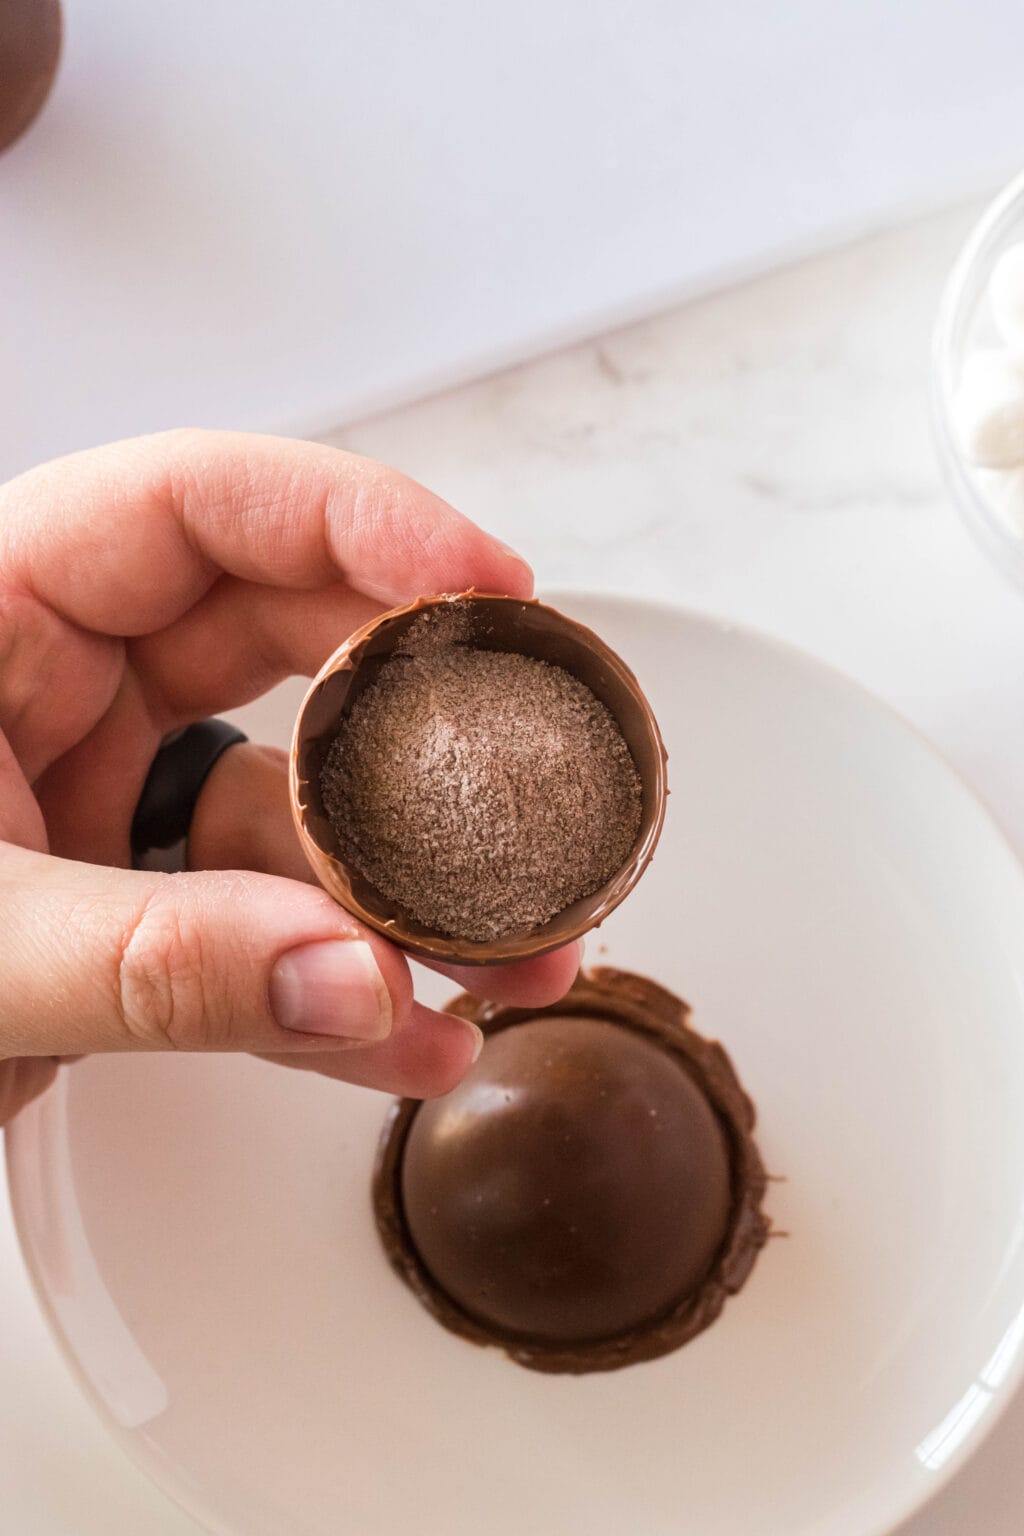 hot cocoa inside a chocolate ball